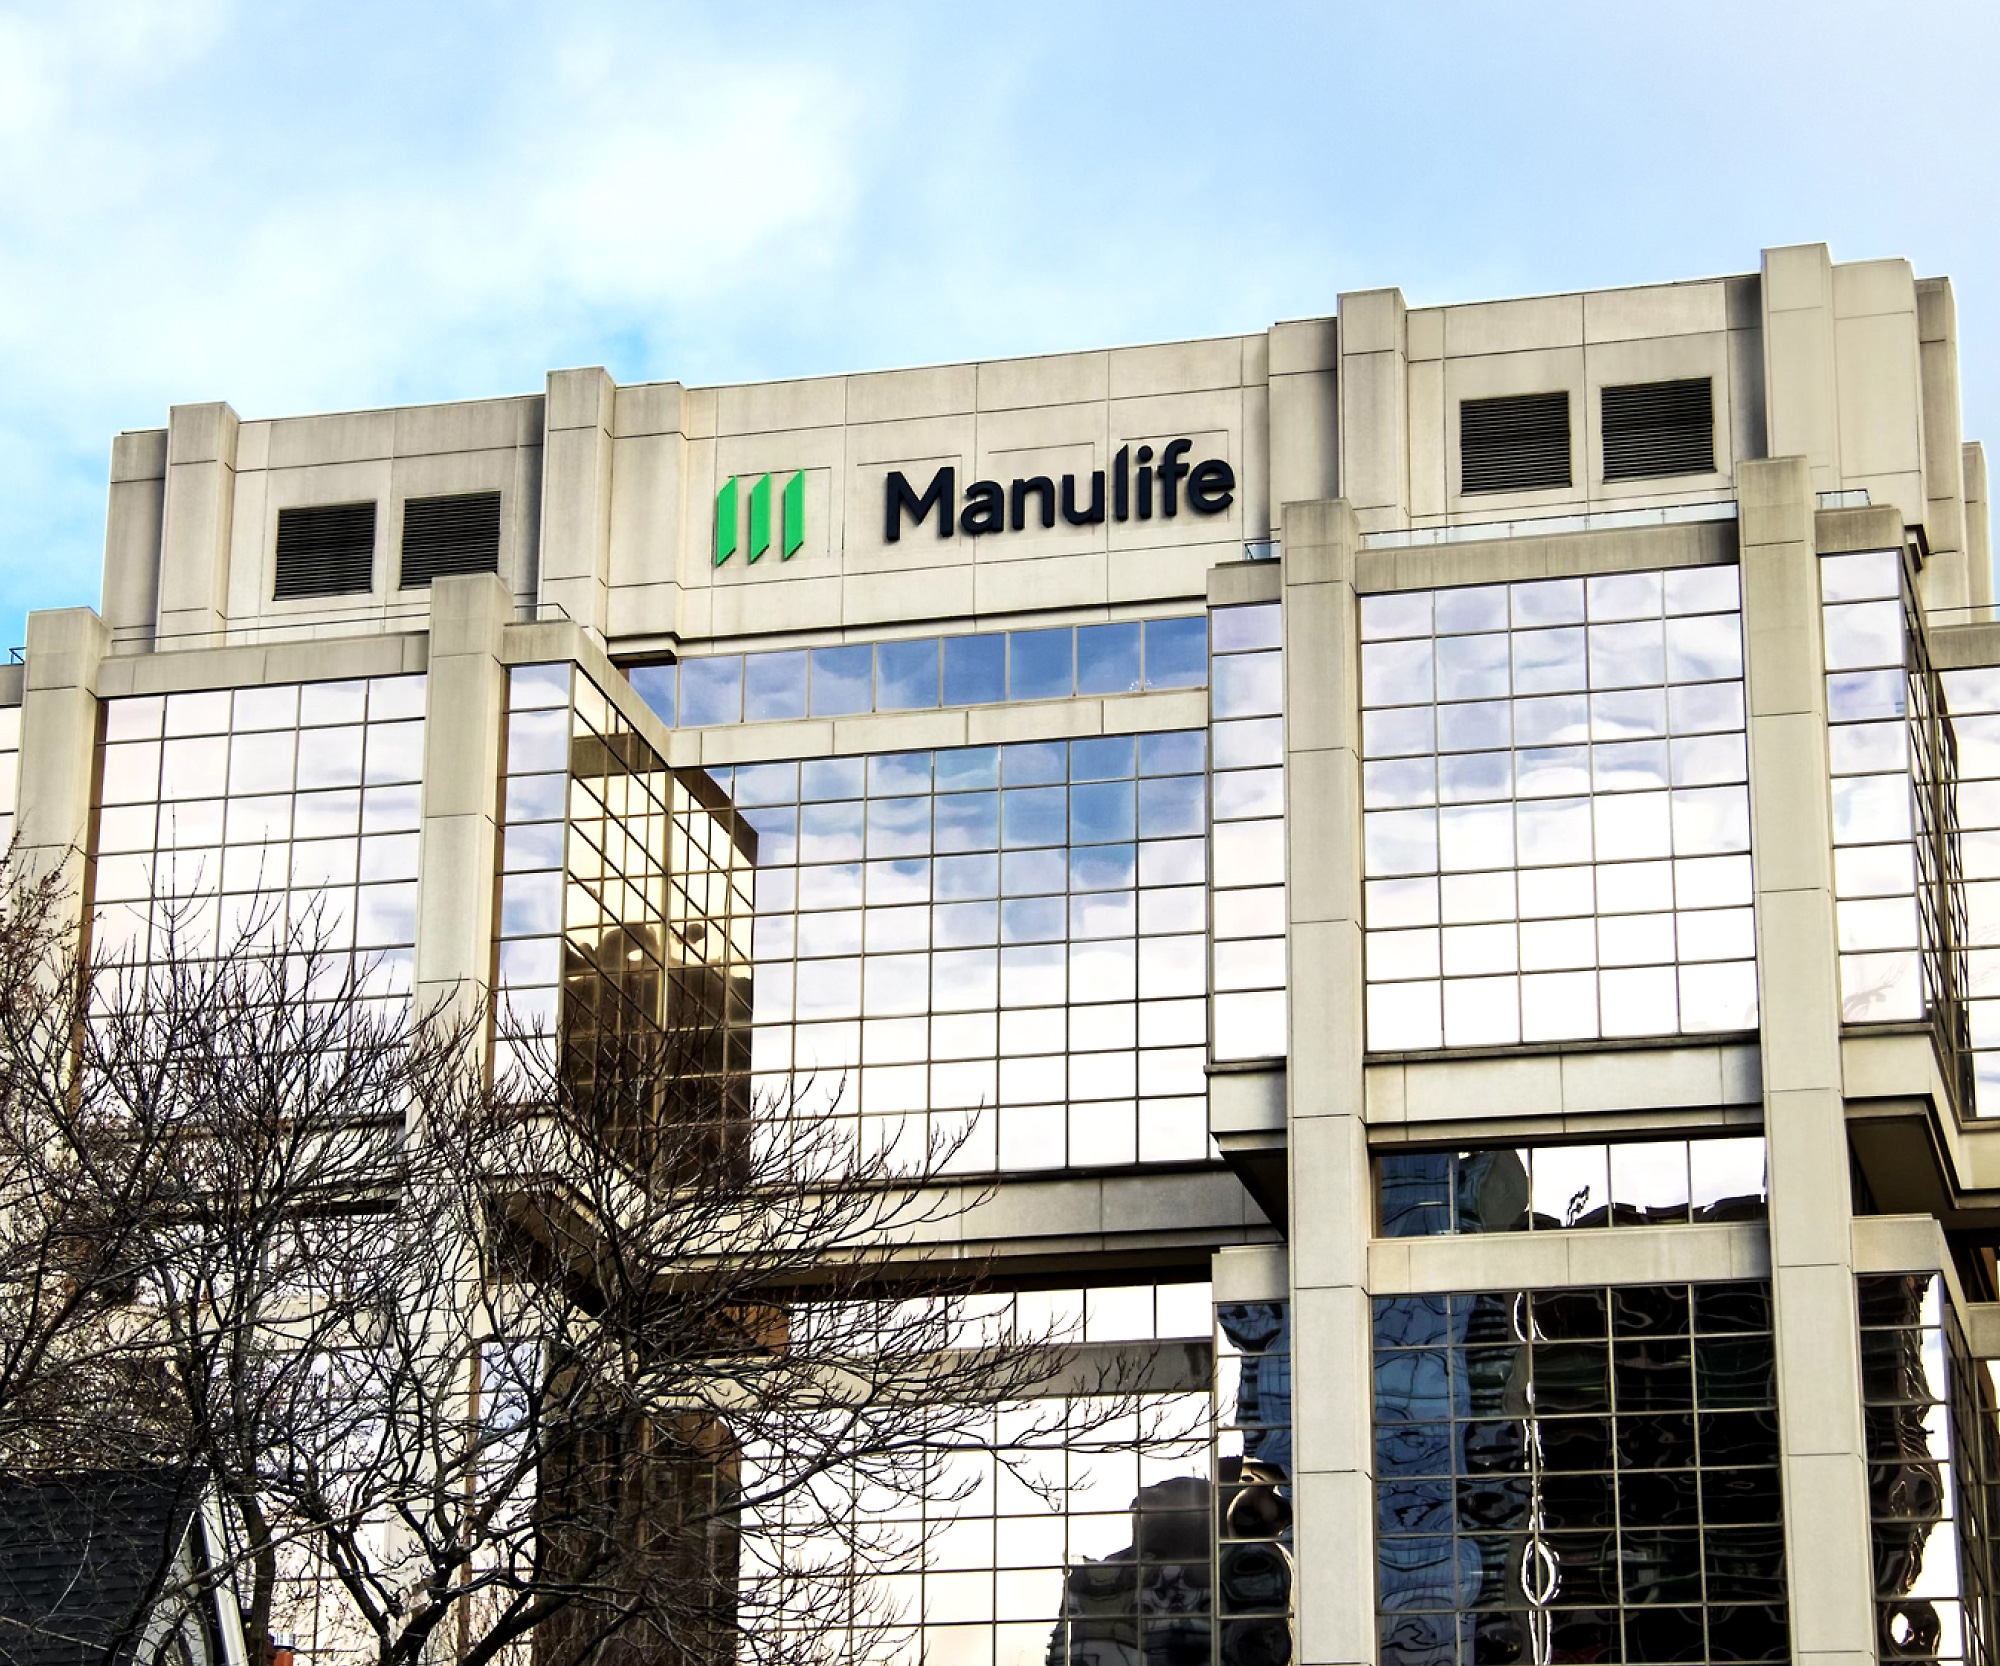 有 Manulife 標誌的大樓